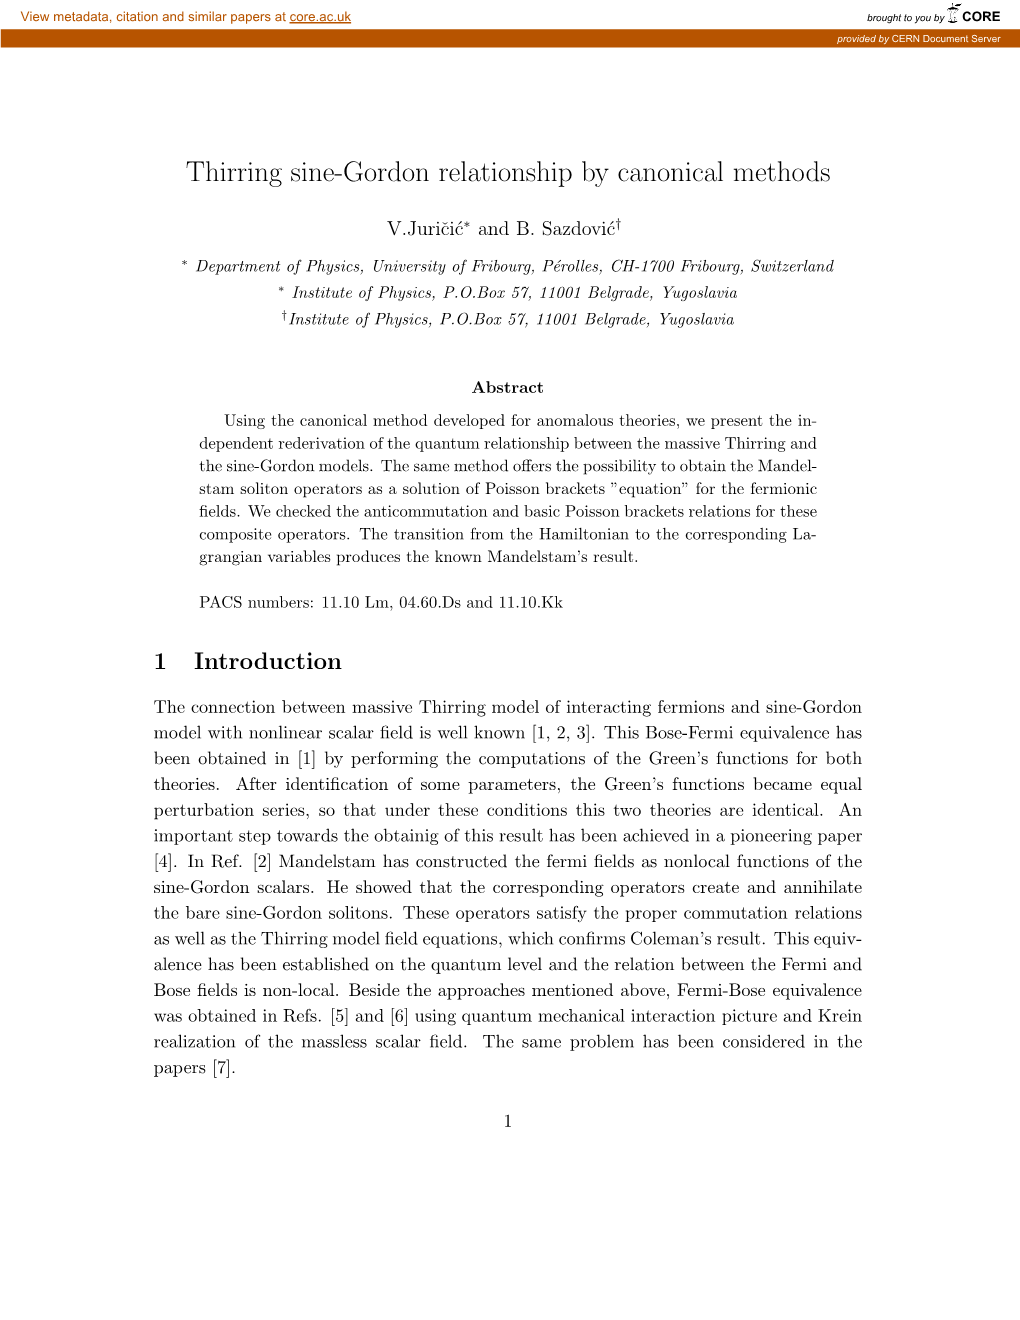 Thirring Sine-Gordon Relationship by Canonical Methods